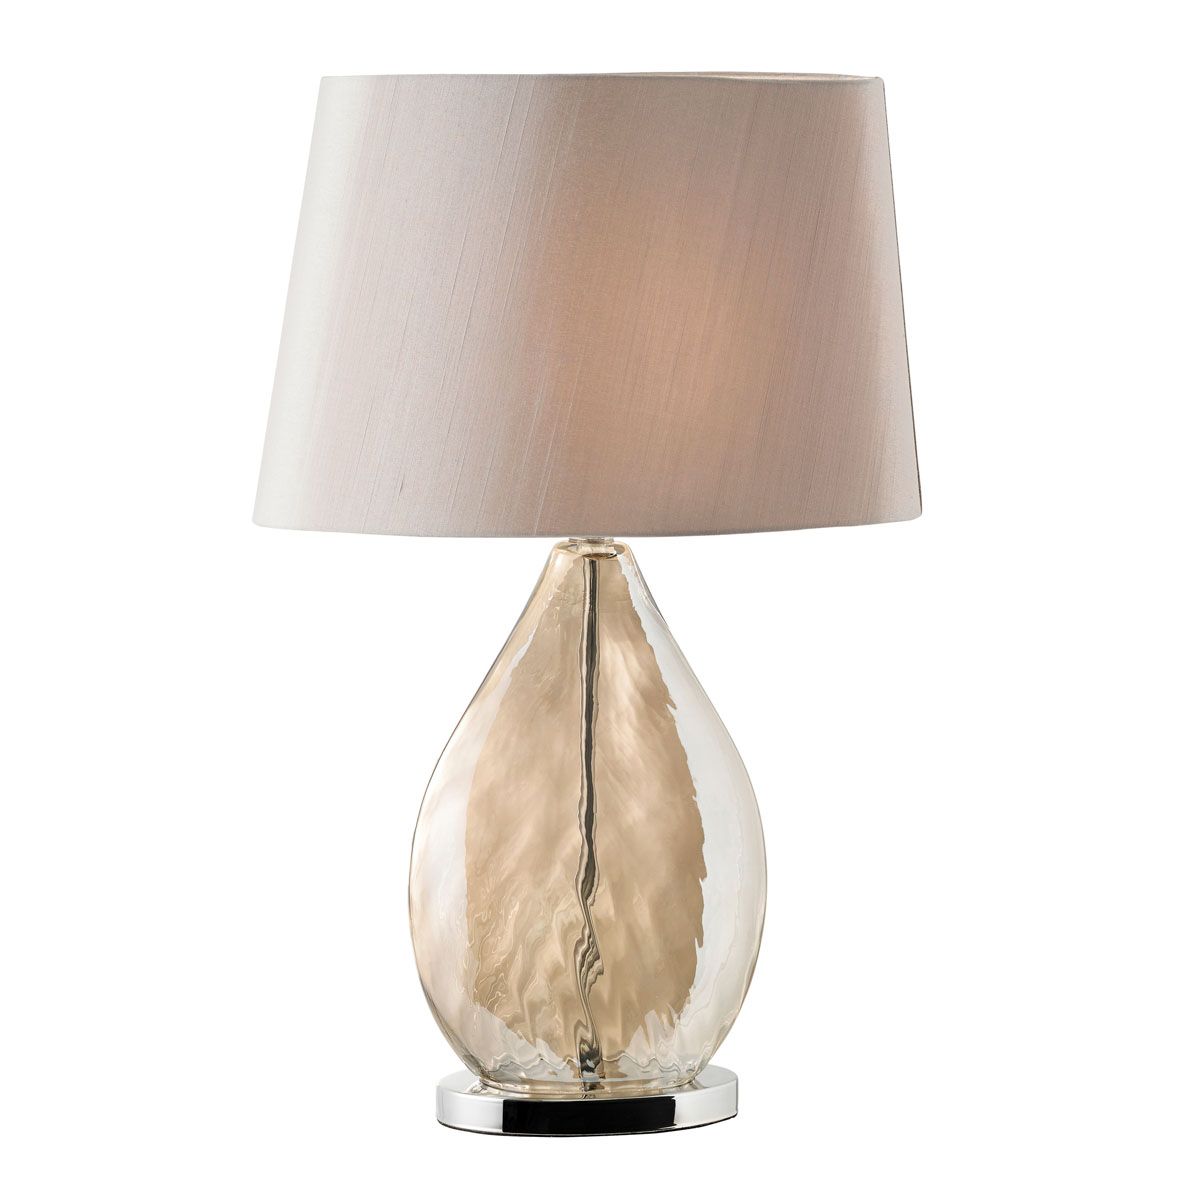 Kew Table Lamp